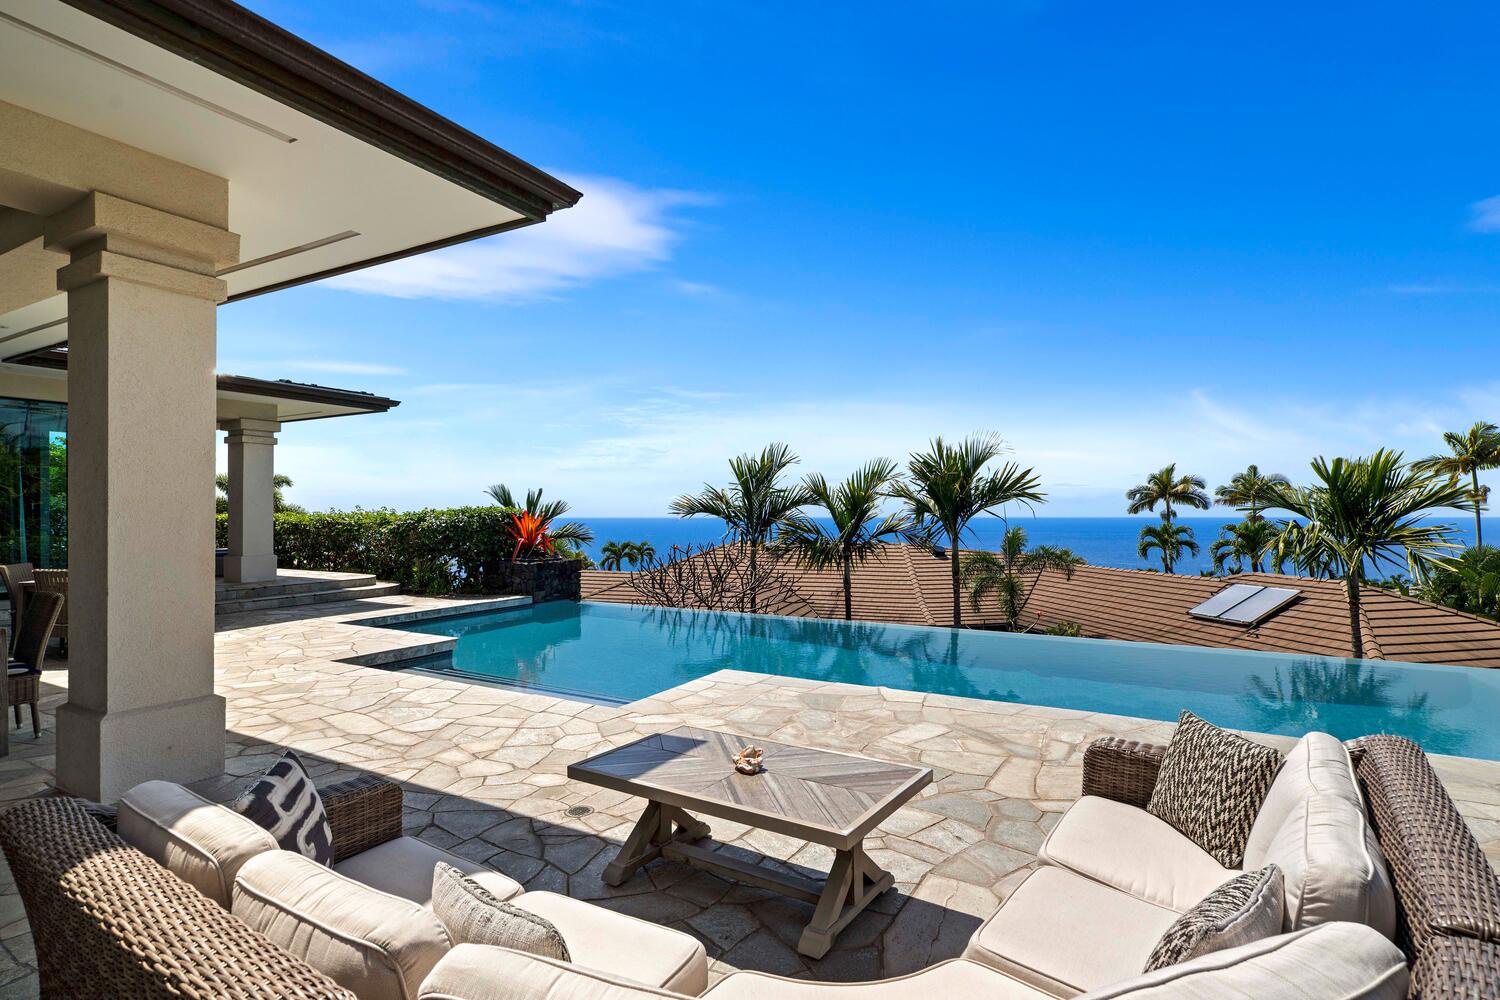 Kailua Kona Vacation Rentals, Blue Hawaii - Lounge pool side with your drink of choice!